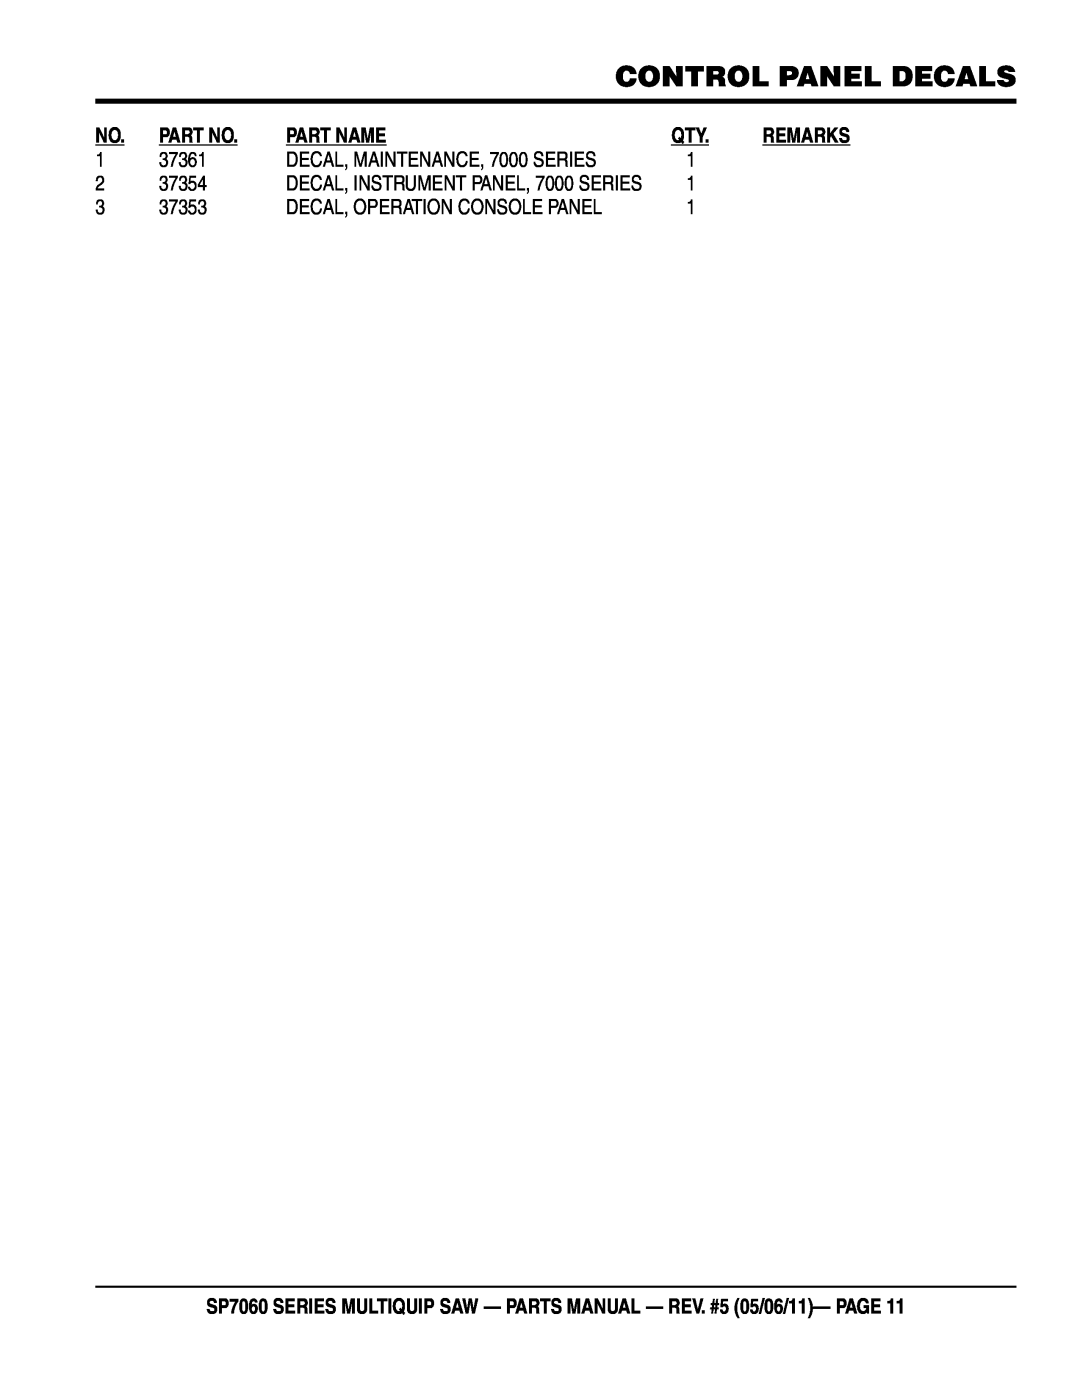 Multiquip SP706036 Control Panel Decals, Part Name, SP7060 SERIES MULTIQUIP SAW - PARTS MANUAL - REV. #5 05/06/11- PAGE 